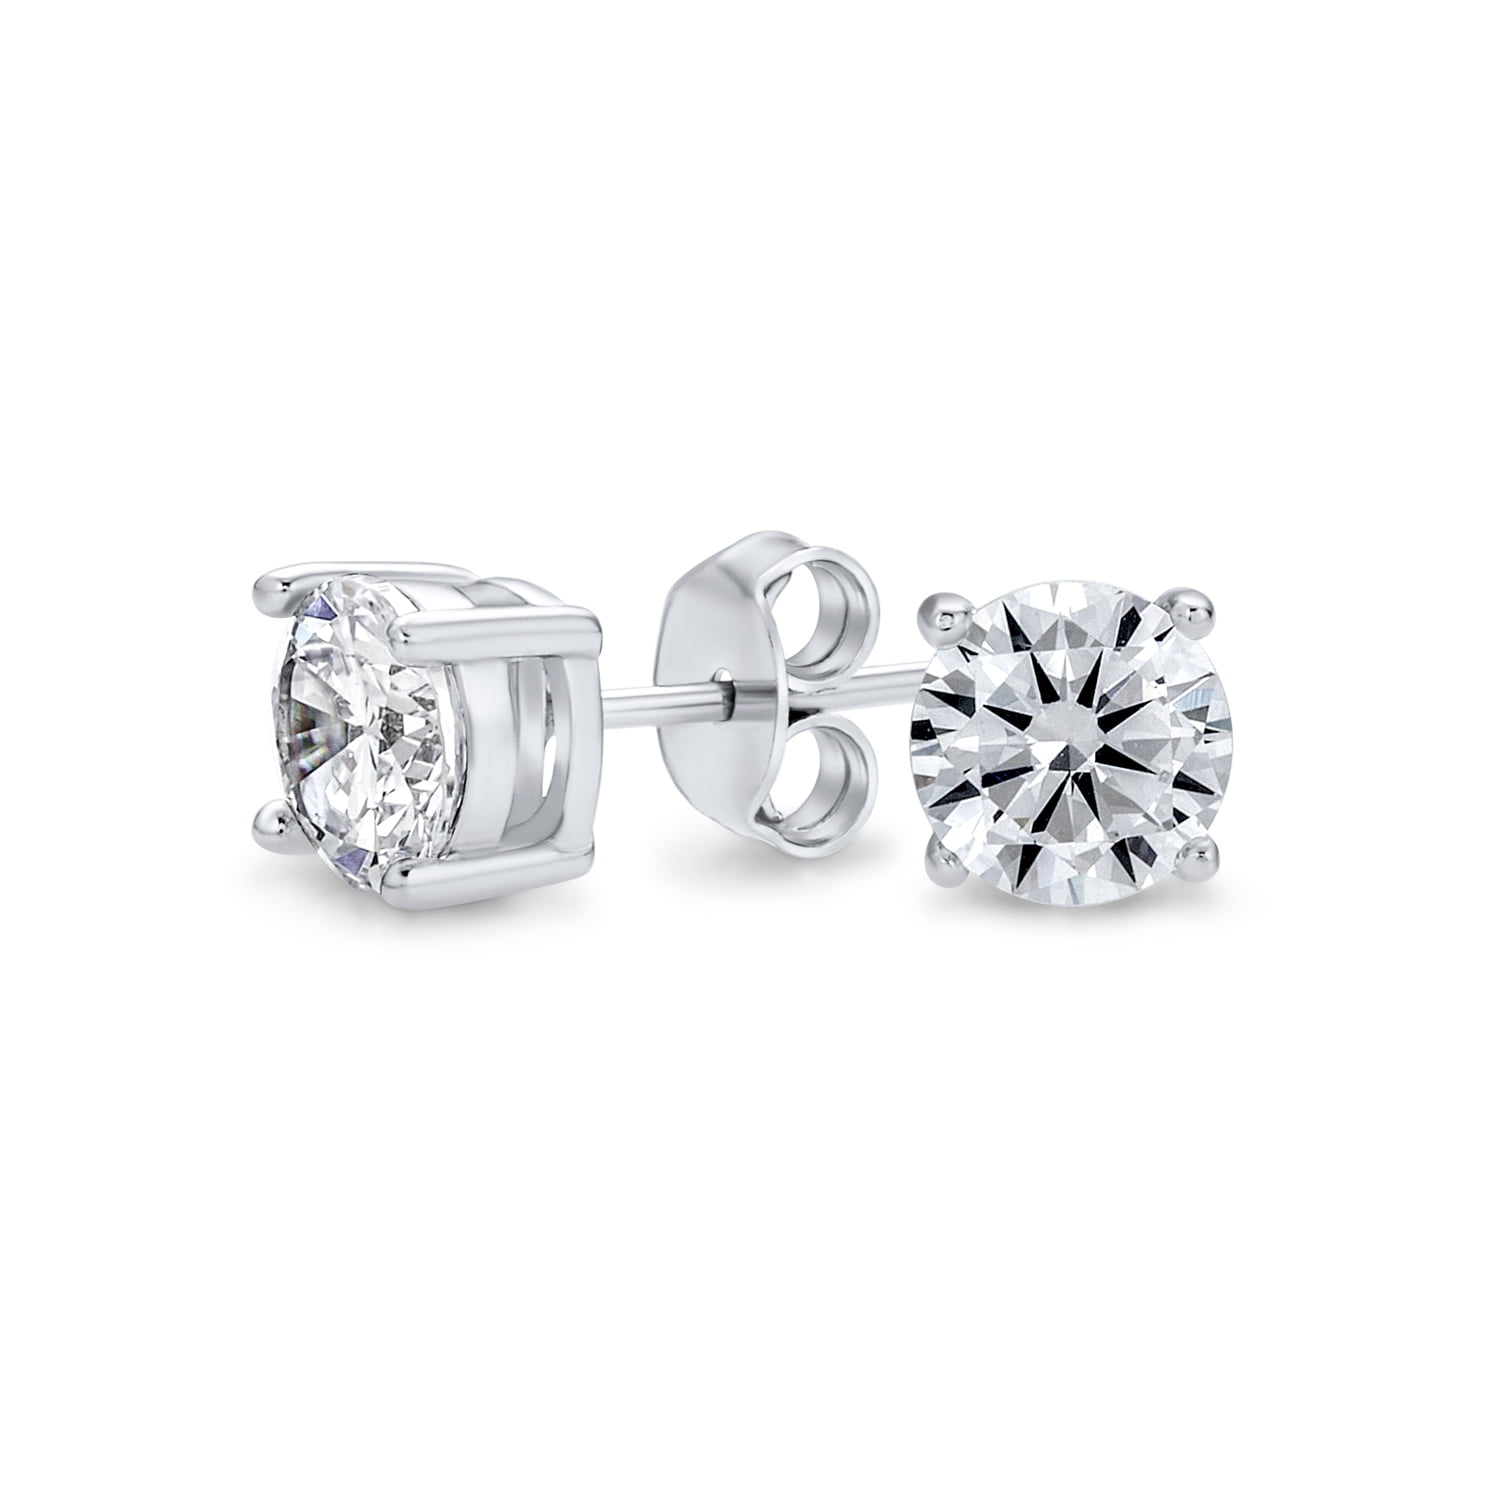 Daesar Stainless Steel Earrings Mens Womens Stud Earrings Love Heart White Cubic Zirconia Earring Silver